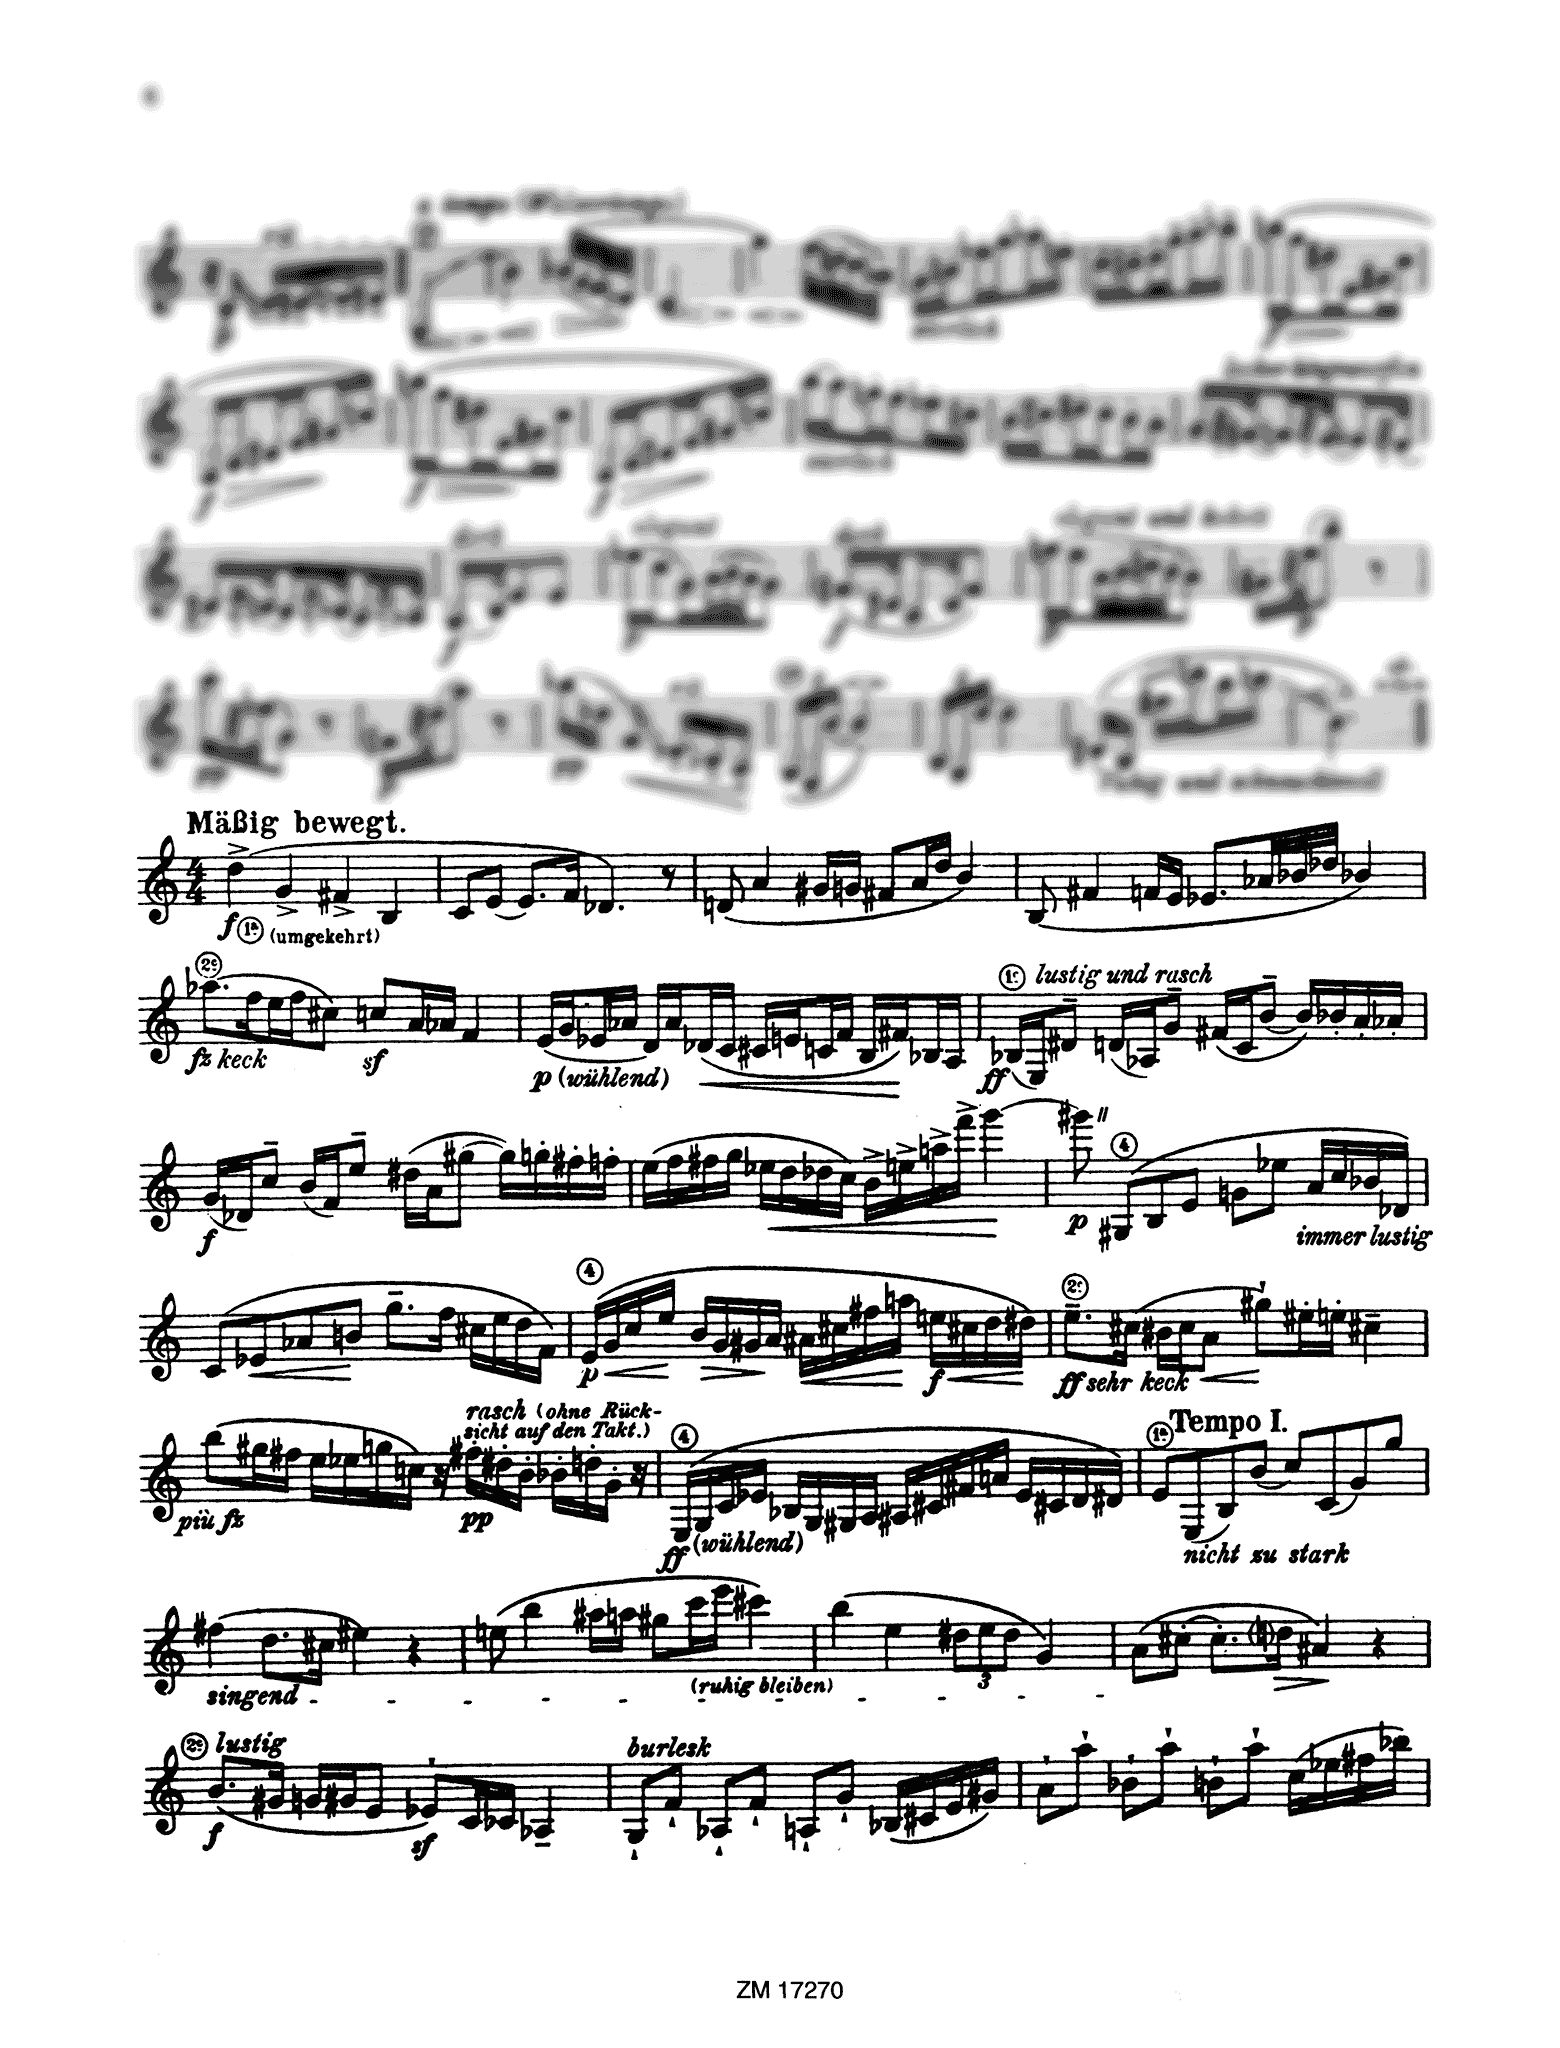 Karg-Elert Sonata for Unaccompanied Clarinet, Op. 110 - Movement Karg-Elert Sonata for Unaccompanied Clarinet, Op. 110 - Movement 4